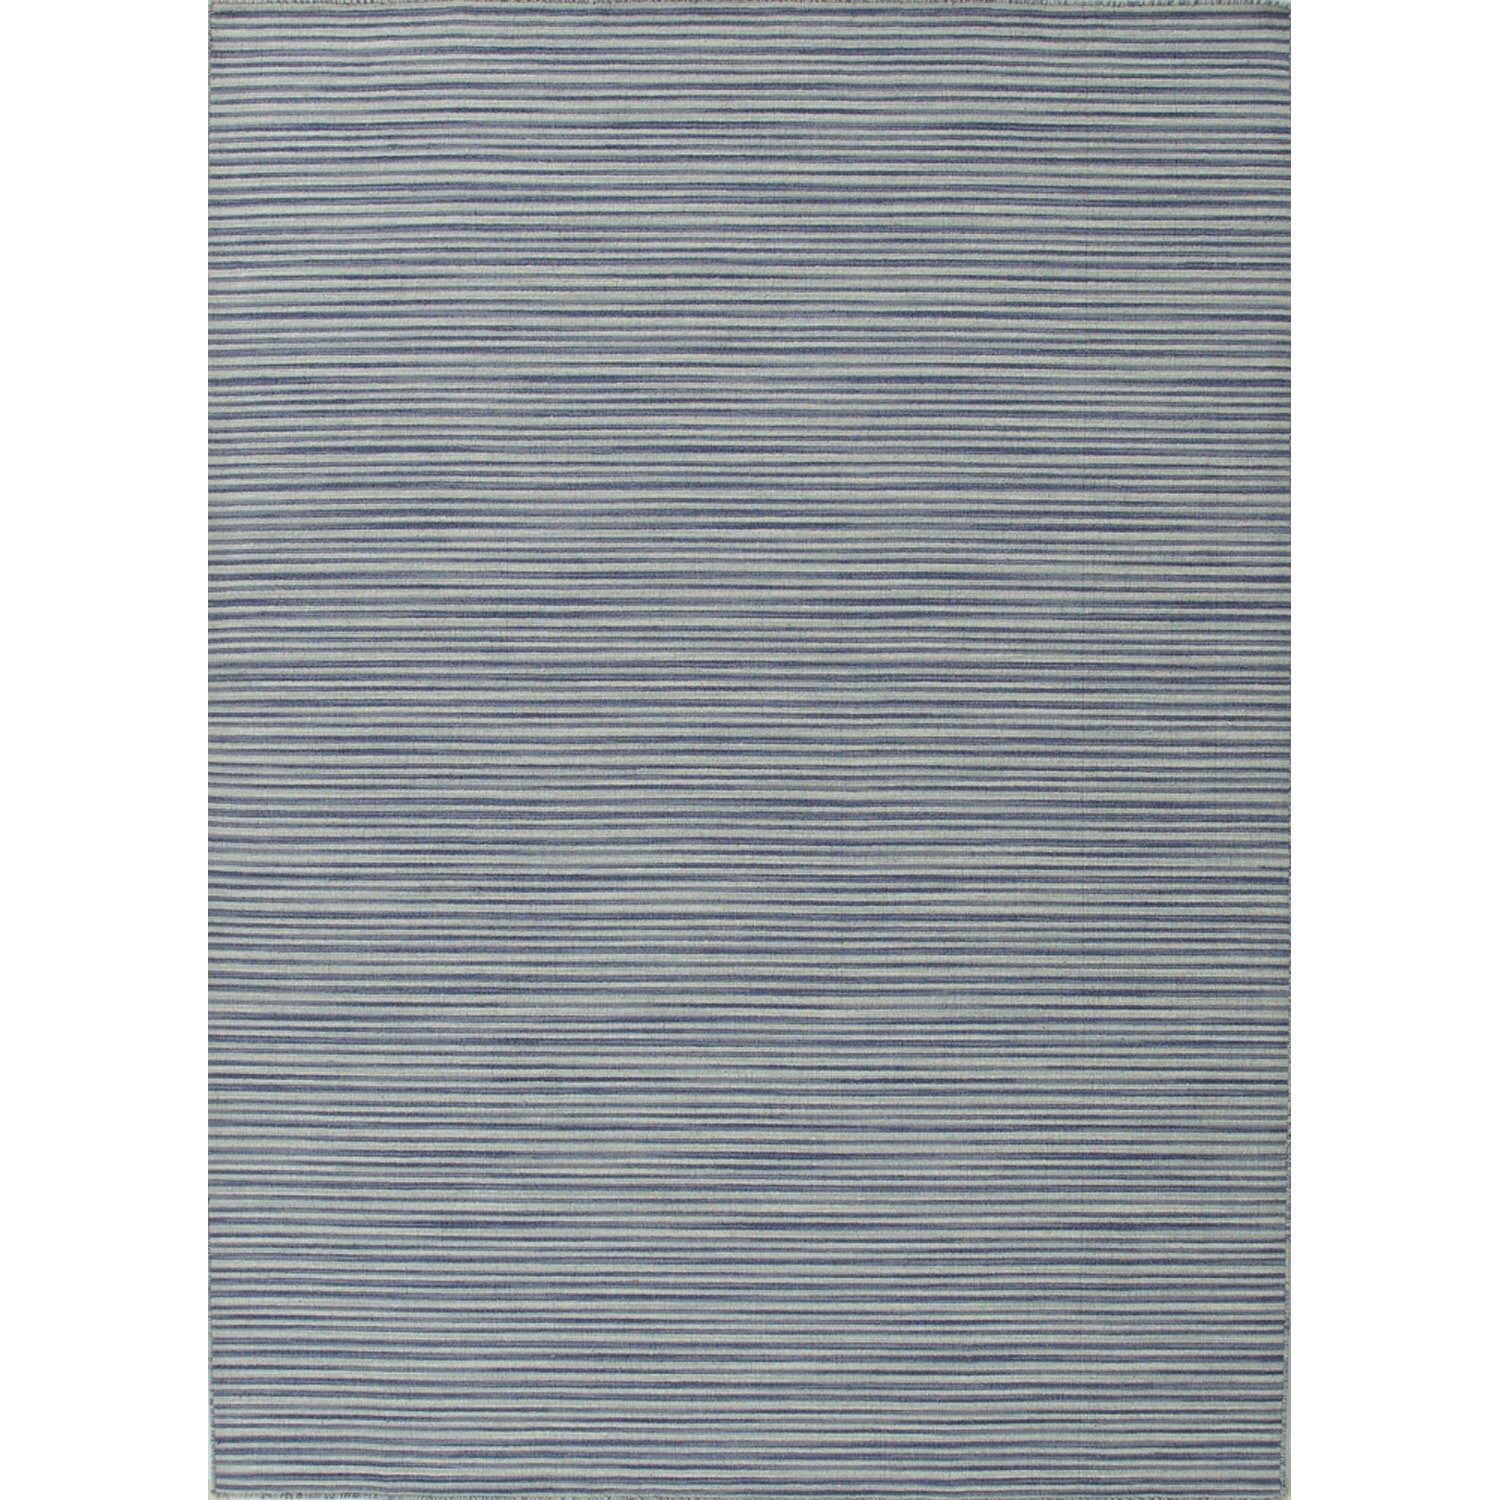 Handmade Flat Weave Stripe Pattern Light Blue Rug (2 X 3)